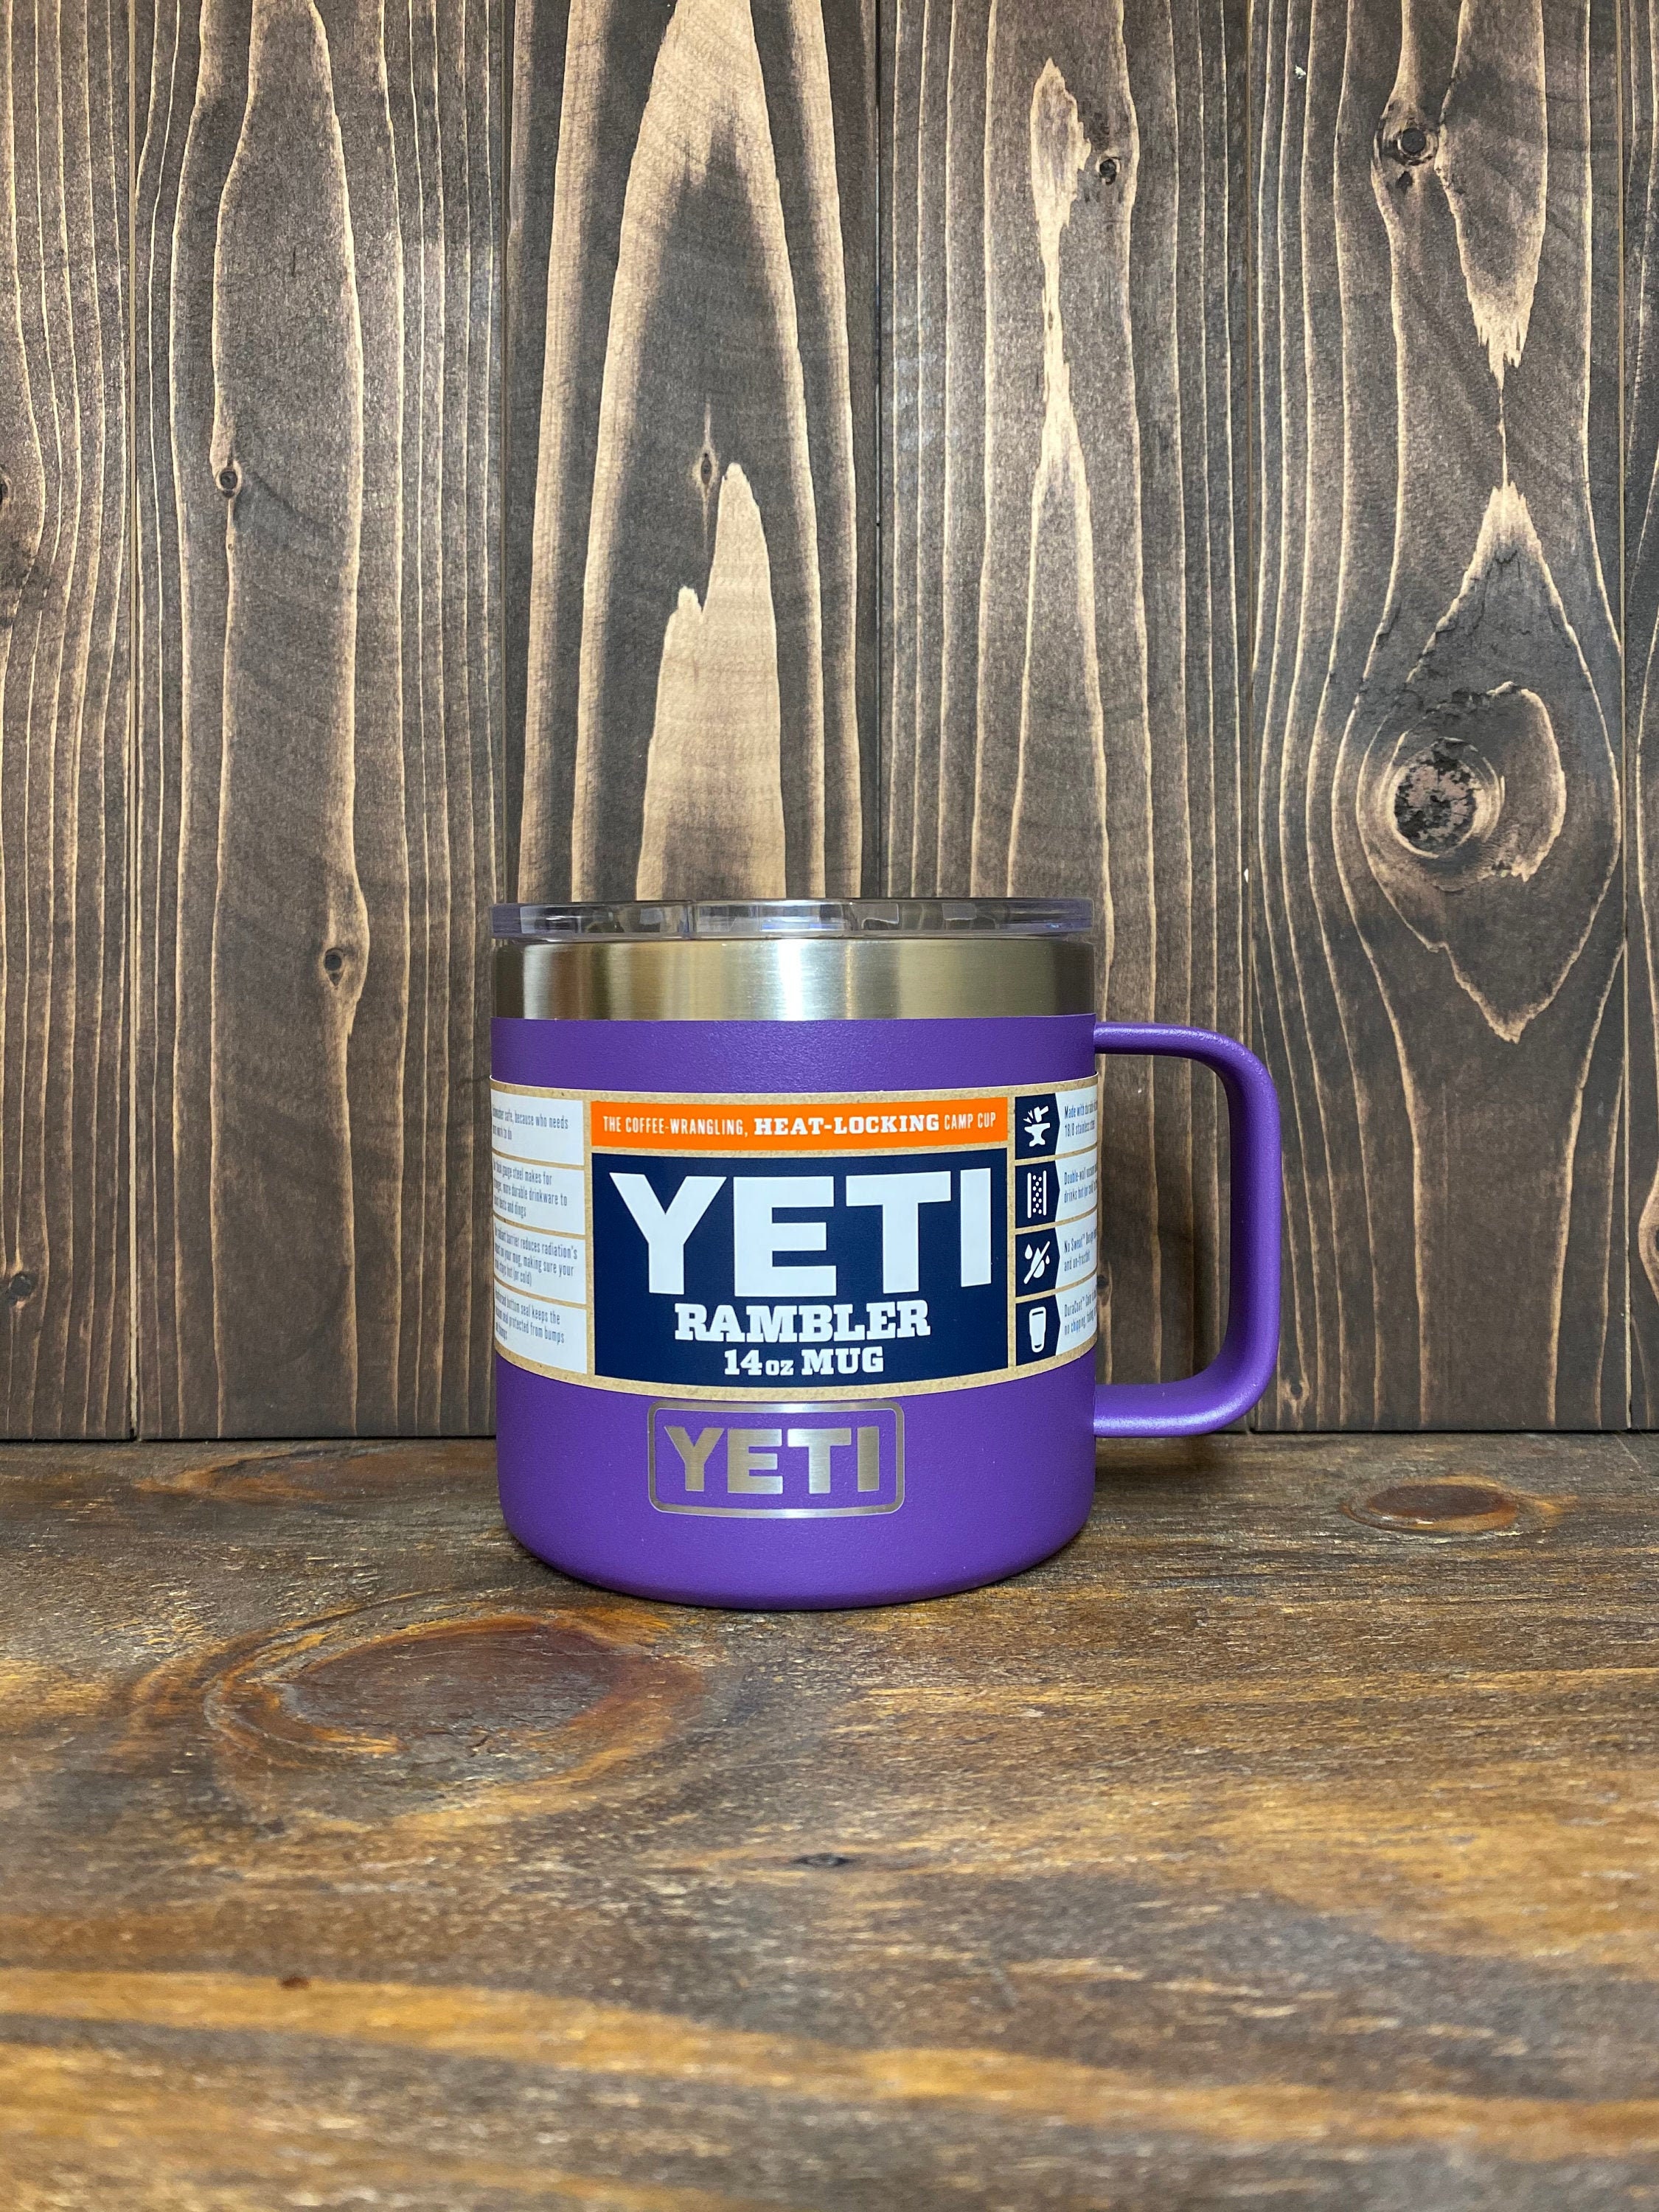 YETI - Rambler - 14oz Mug - Peak Purple